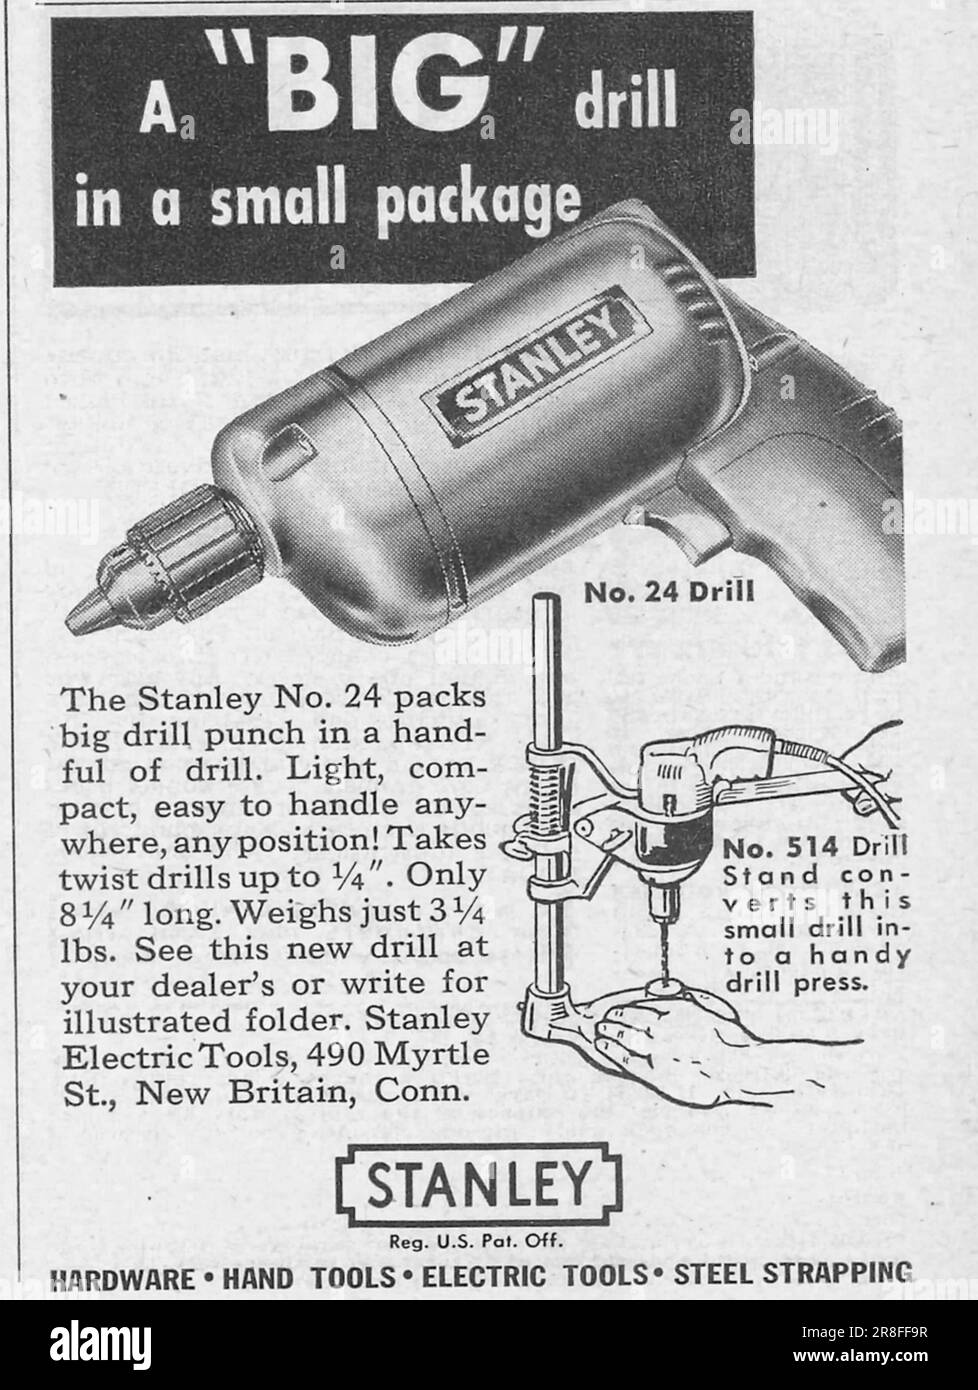 Stanley drills advert in a magazine 1949 Stock Photo